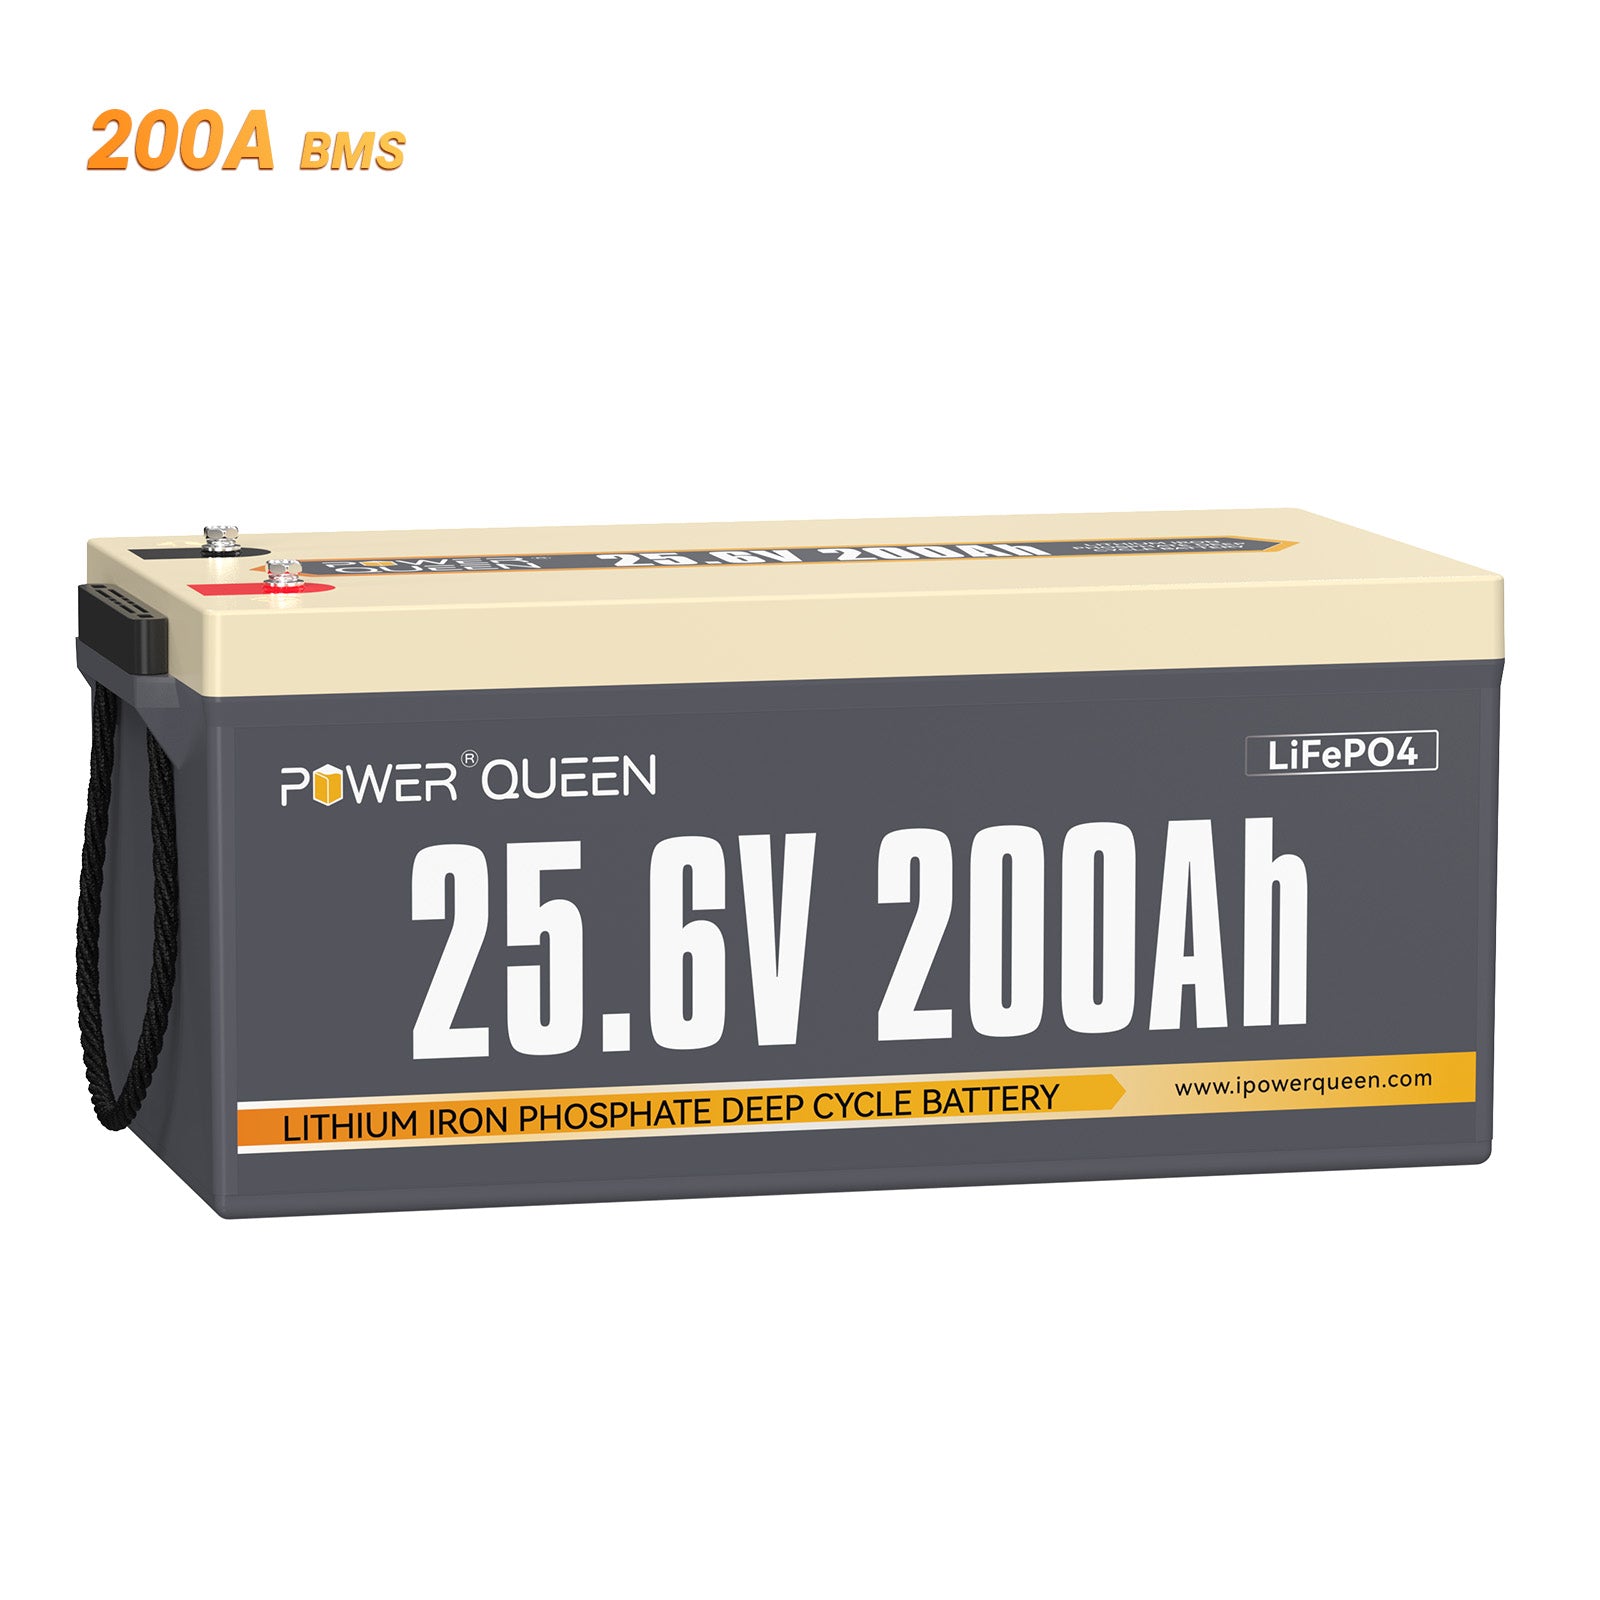 【0% BTW】Power Queen 25,6 V 200 Ah LiFePO4-batterij, ingebouwd 200 A BMS